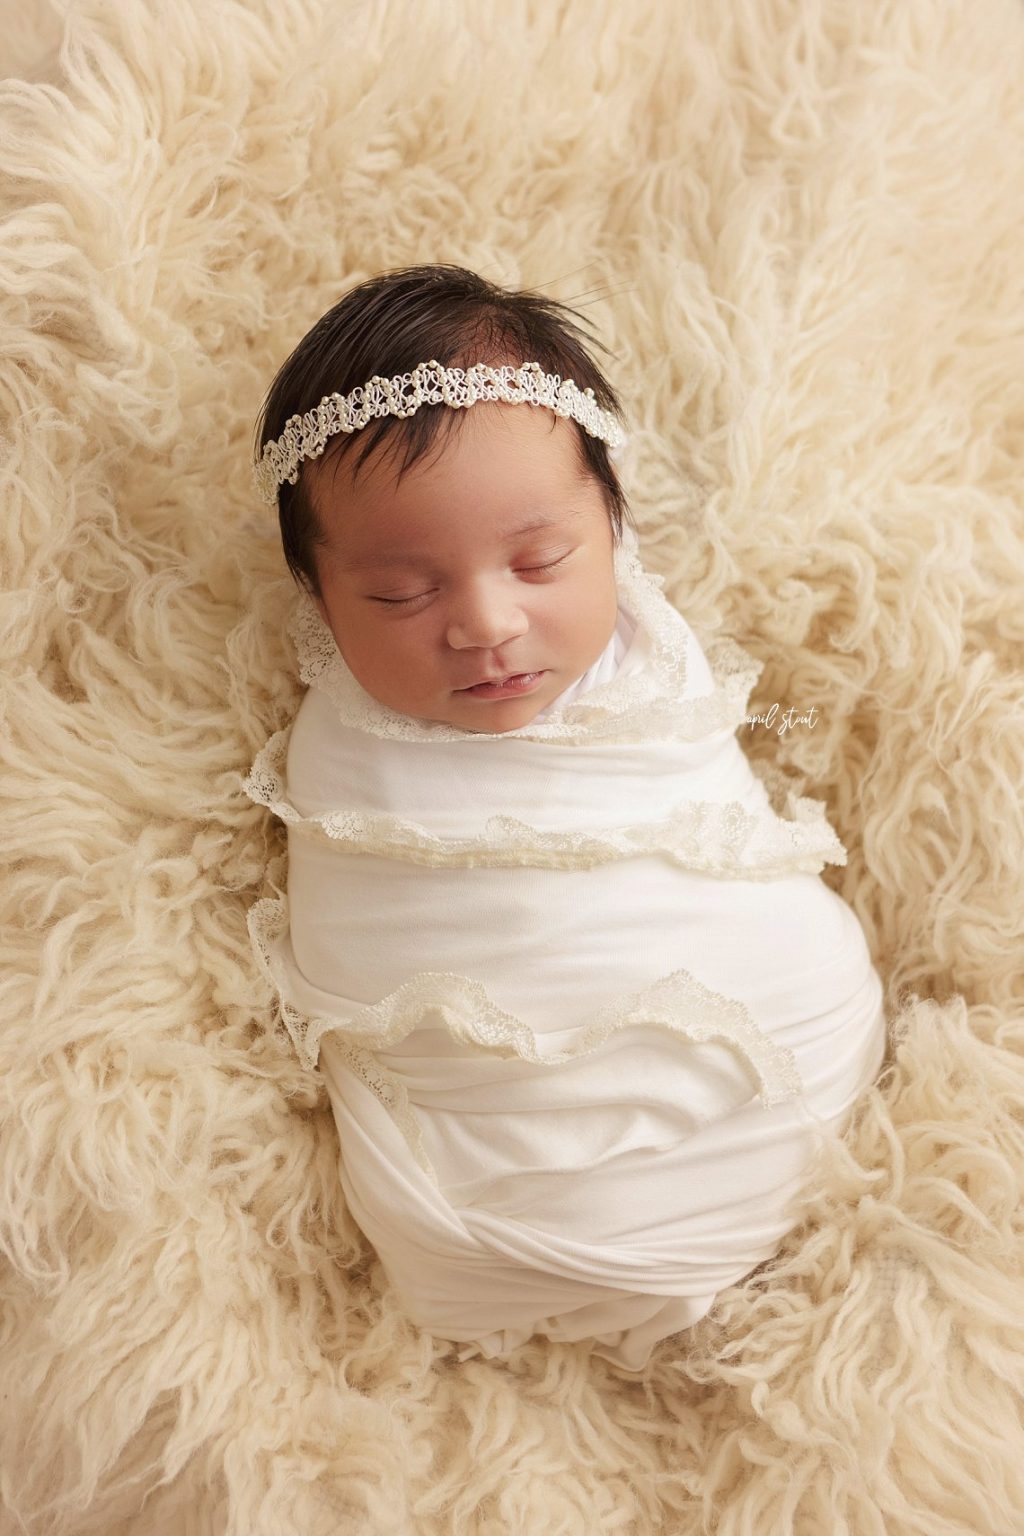 Oklahoma newborn baby photographers April Stout